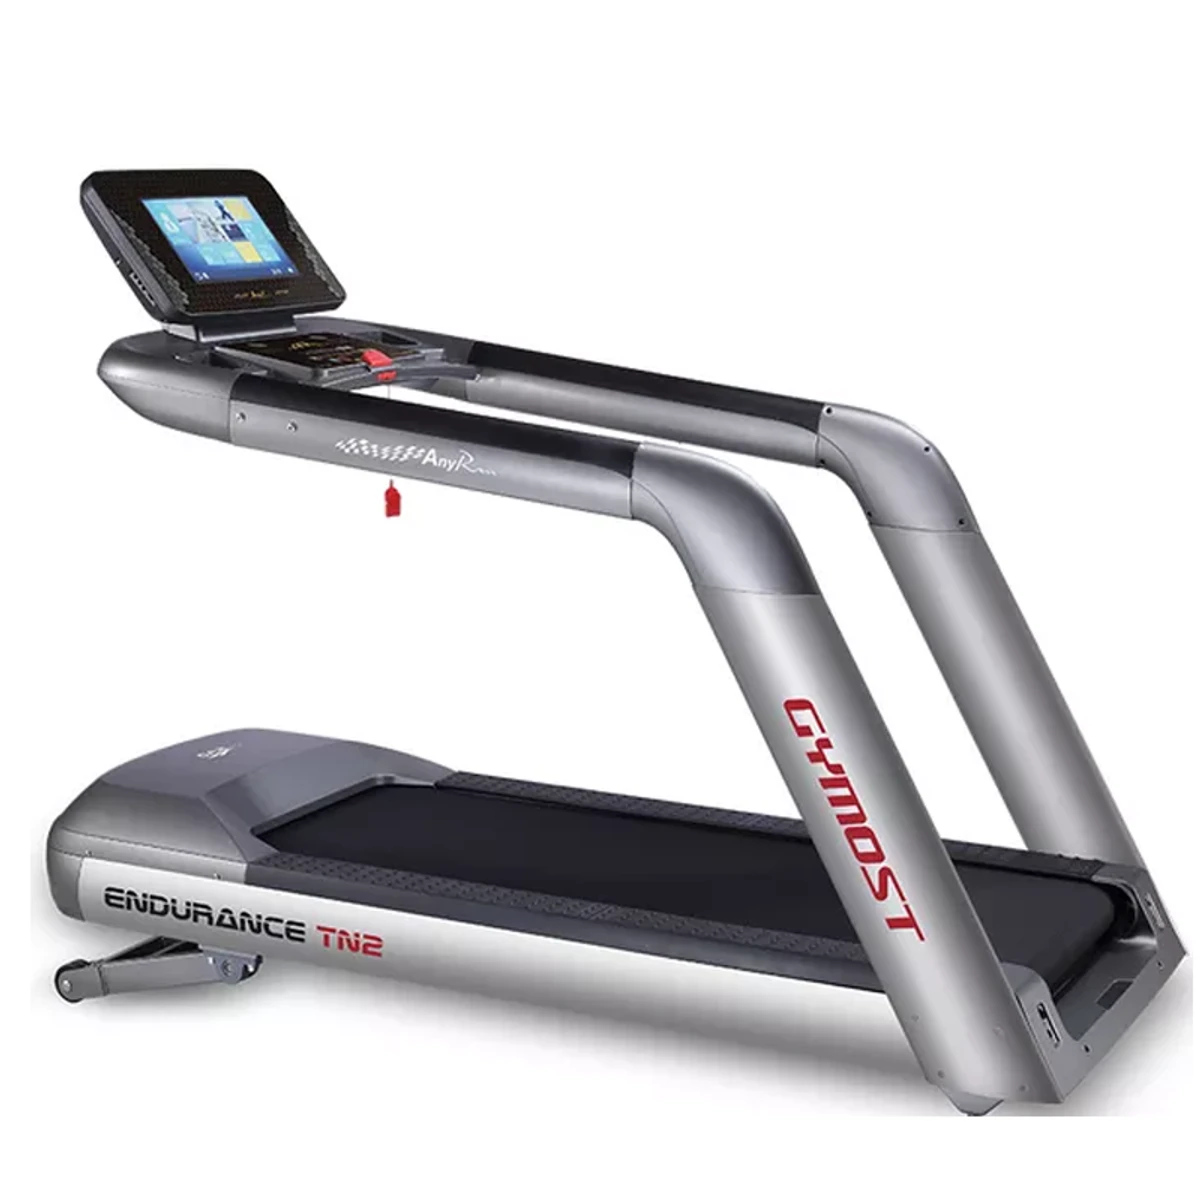 Gymost Endurance 6140 TA Commercial Treadmill